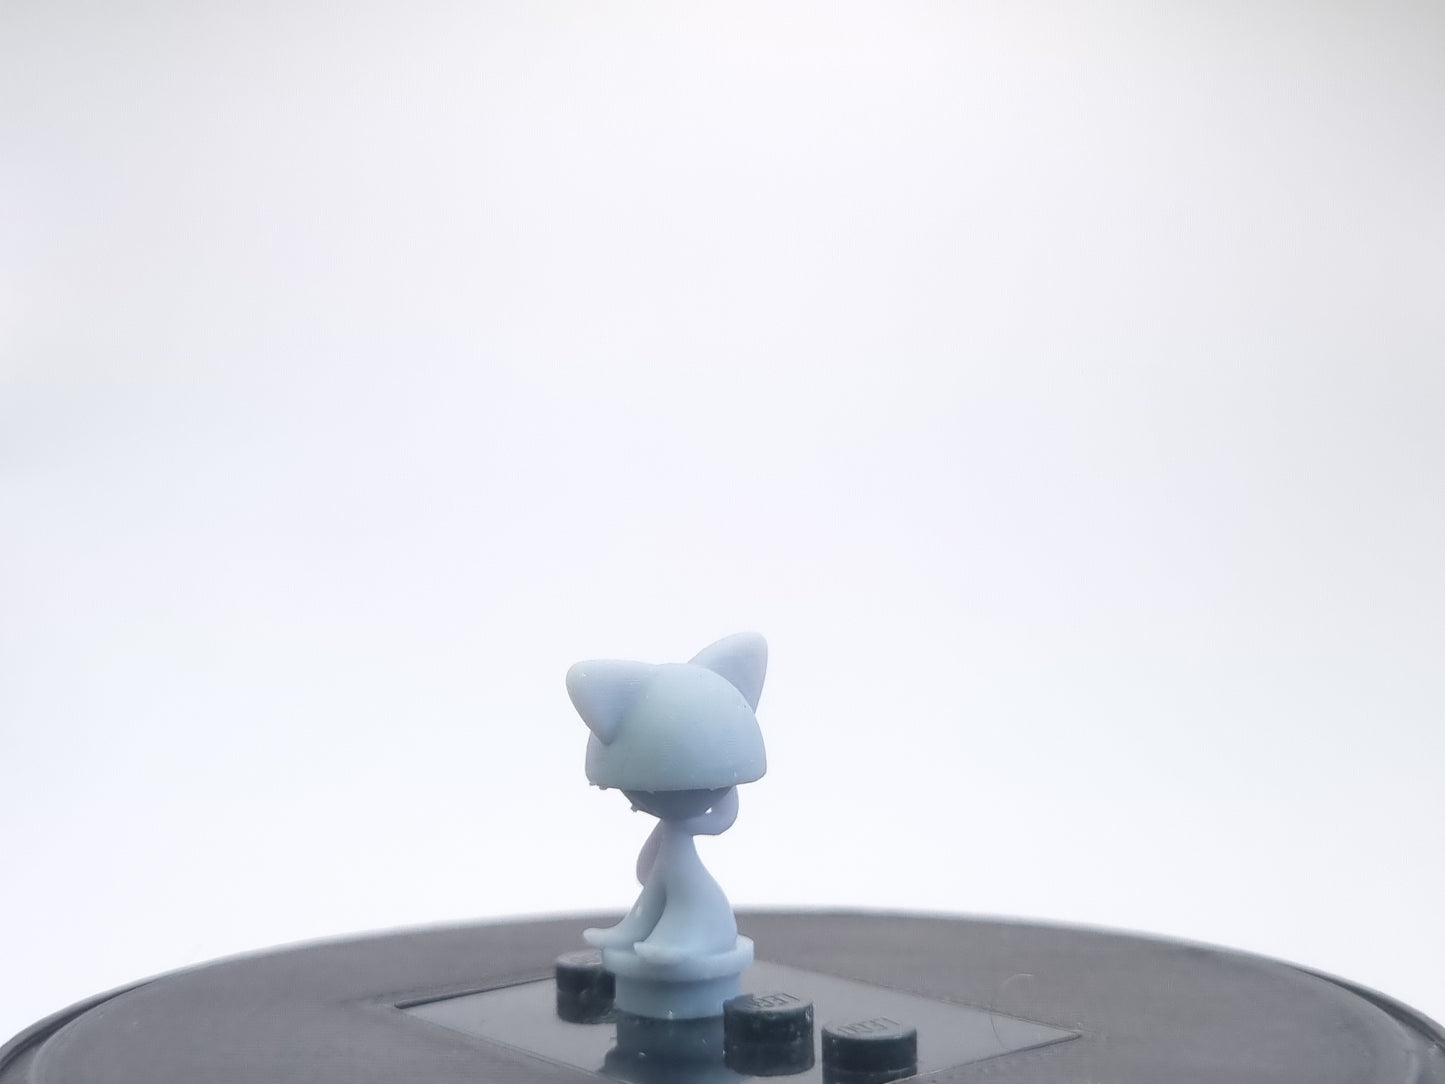 lego compatible 3D printed egg head!